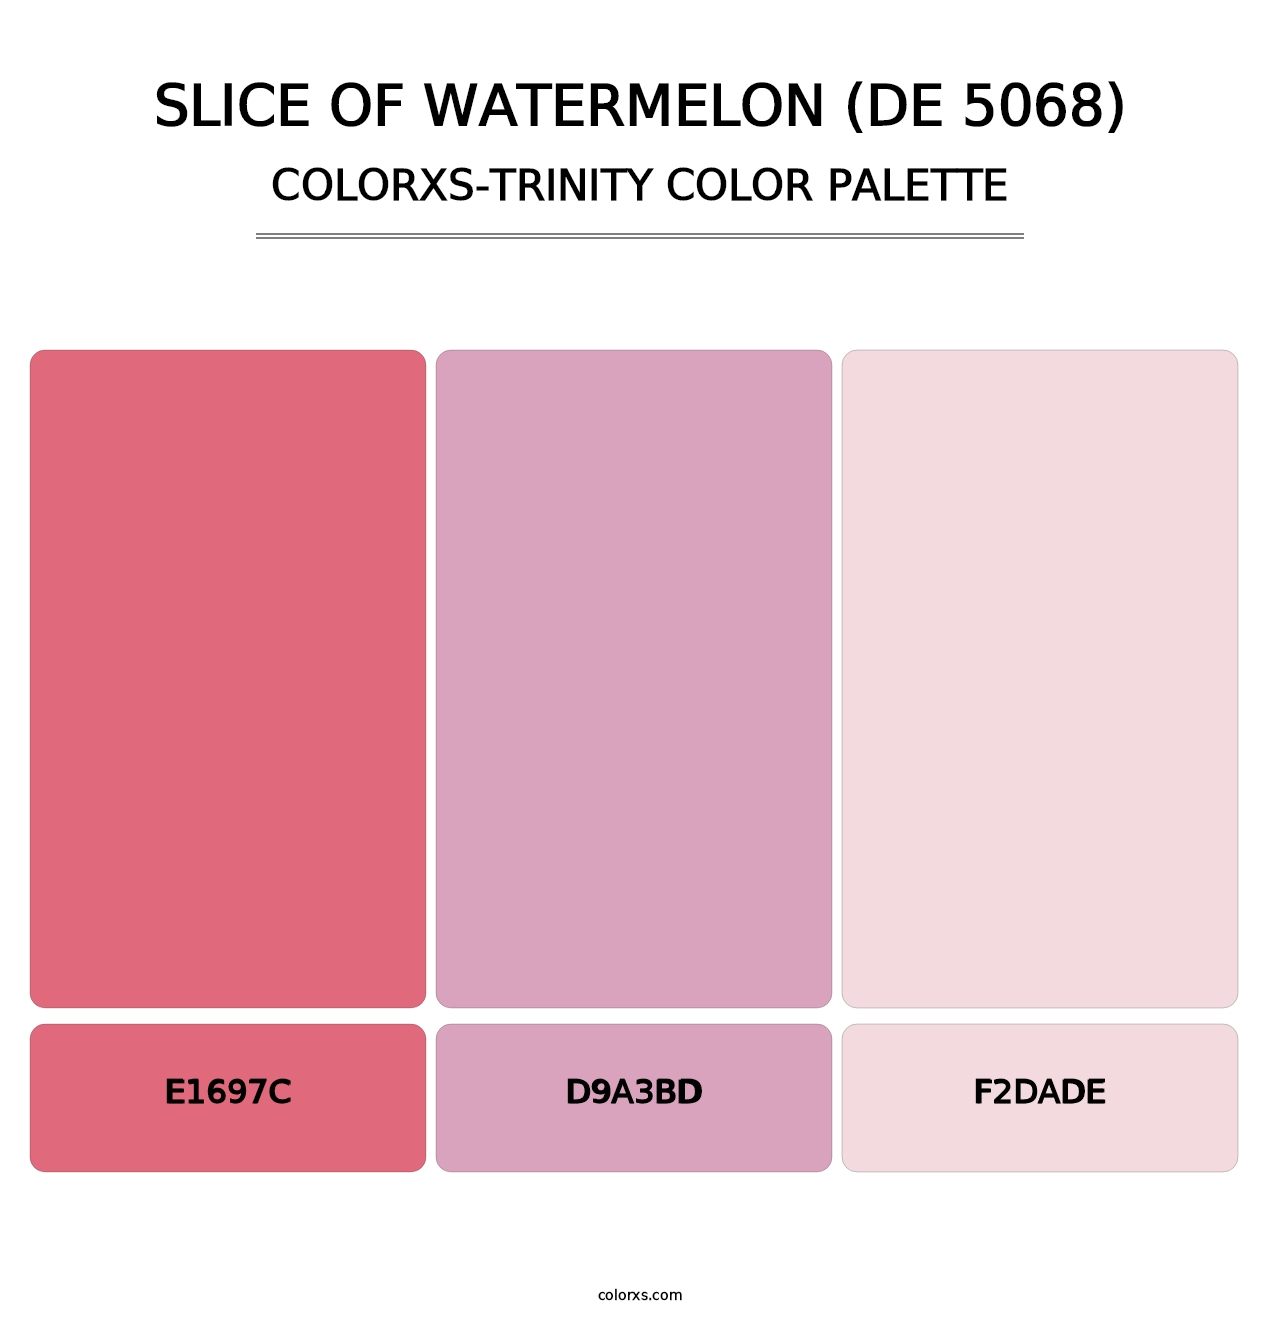 Slice of Watermelon (DE 5068) - Colorxs Trinity Palette